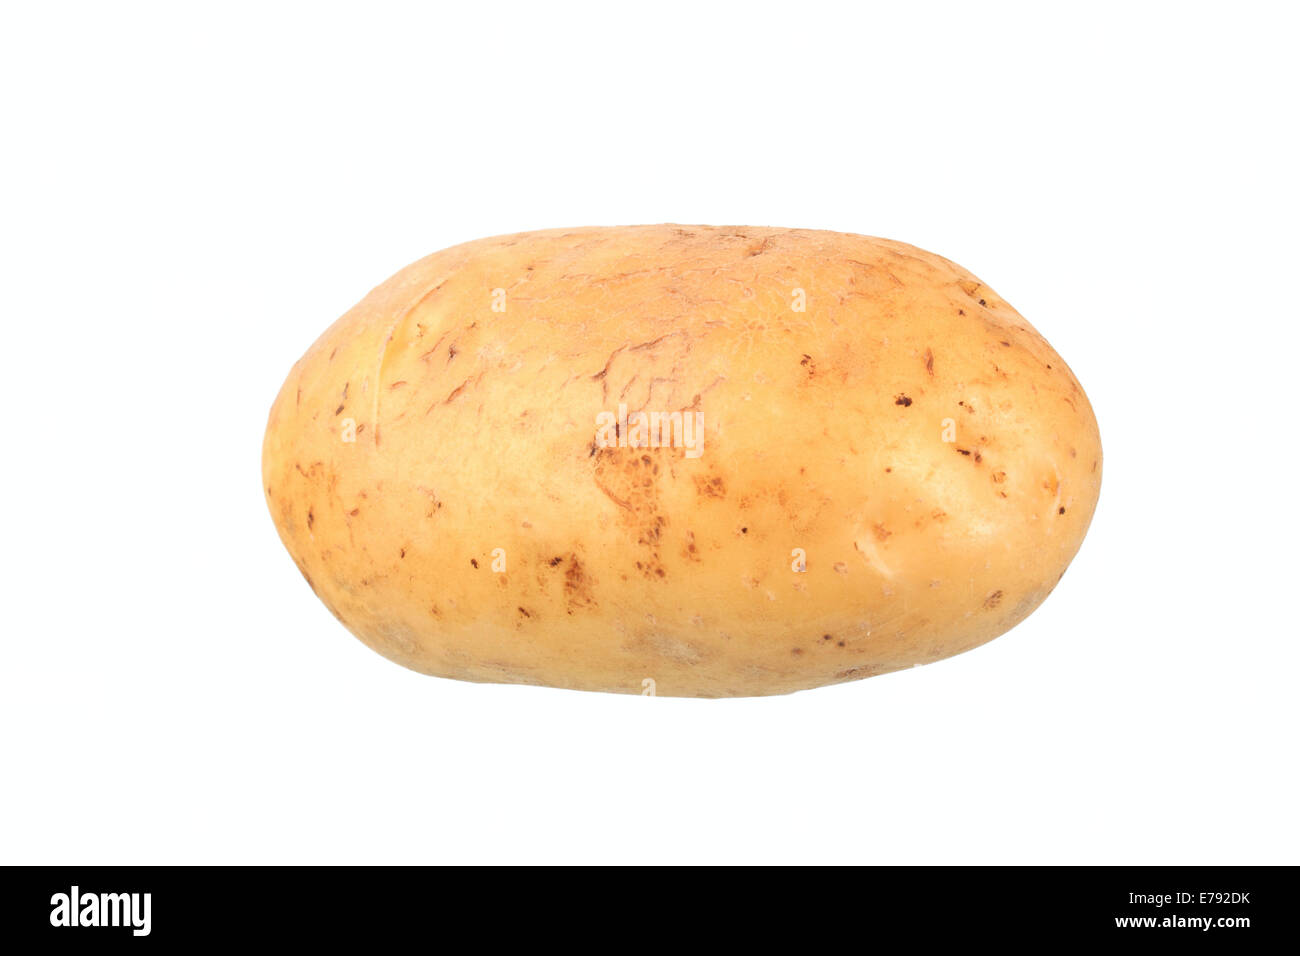 Potato, Talent variety Stock Photo